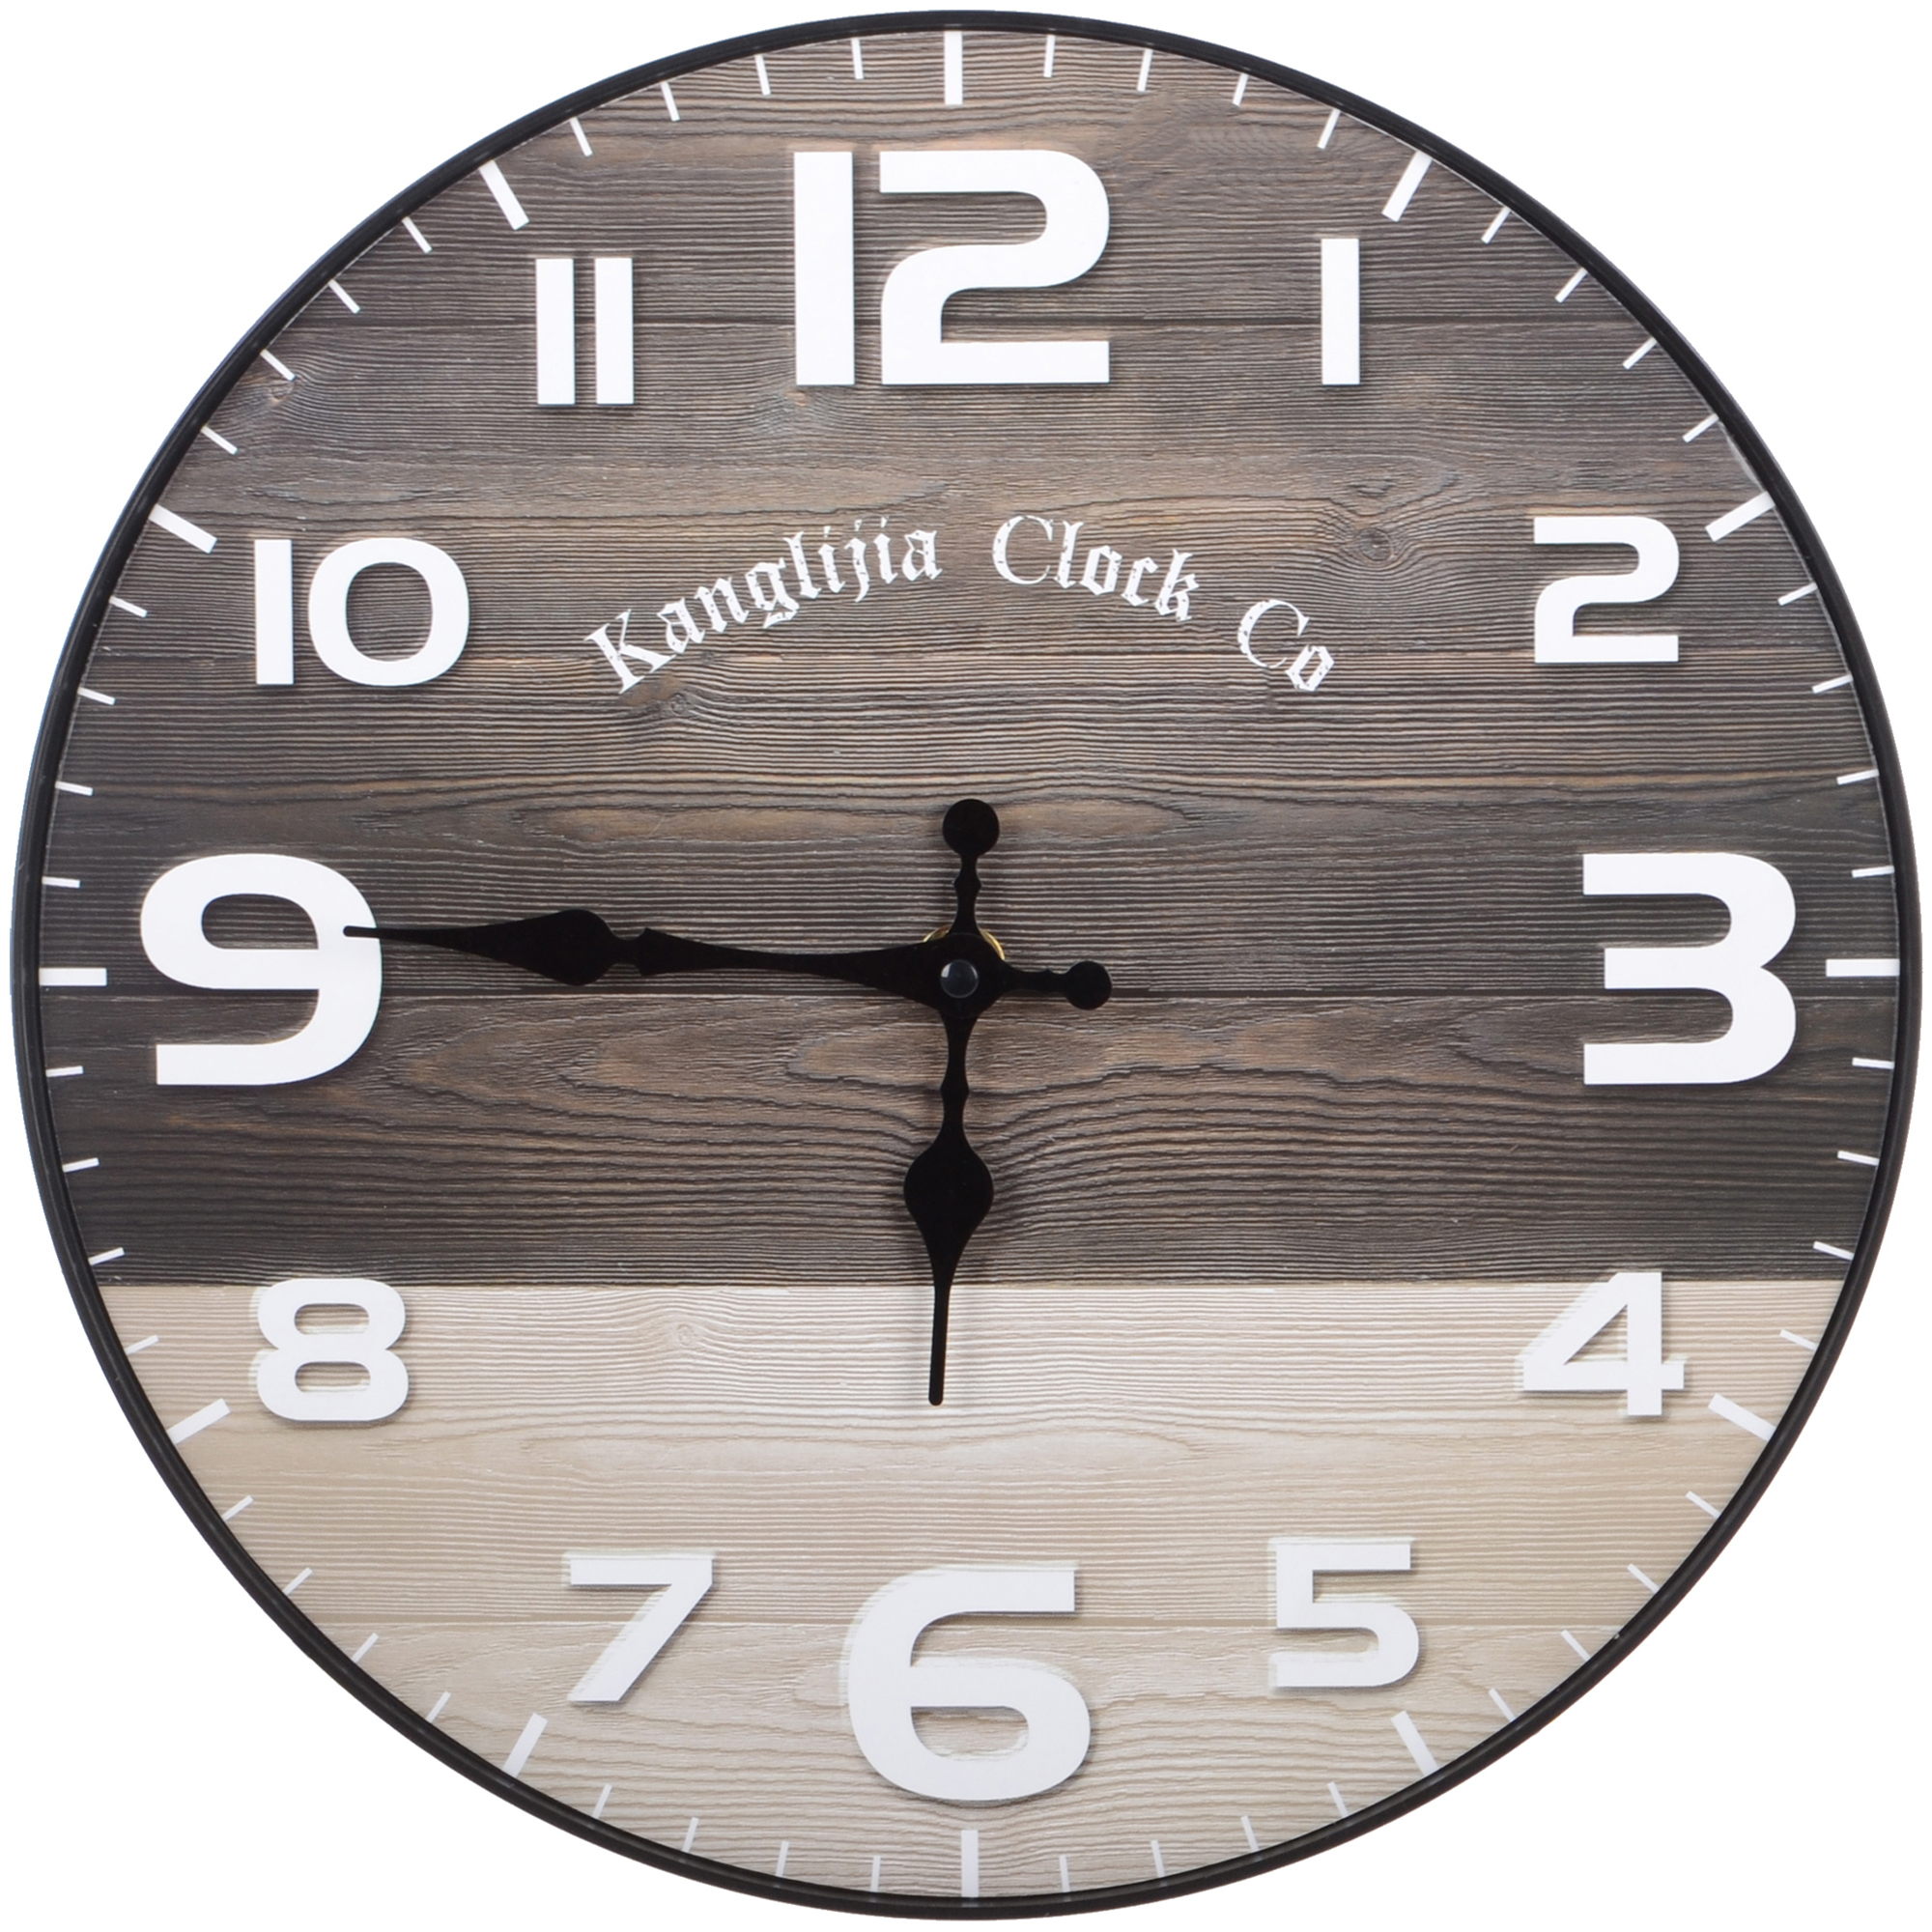 Часы настенные Kanglijia Clock коричневые 29,5х29,5х3,5 см часы электронные настенные настольные будильник термометр календарь d 30 см